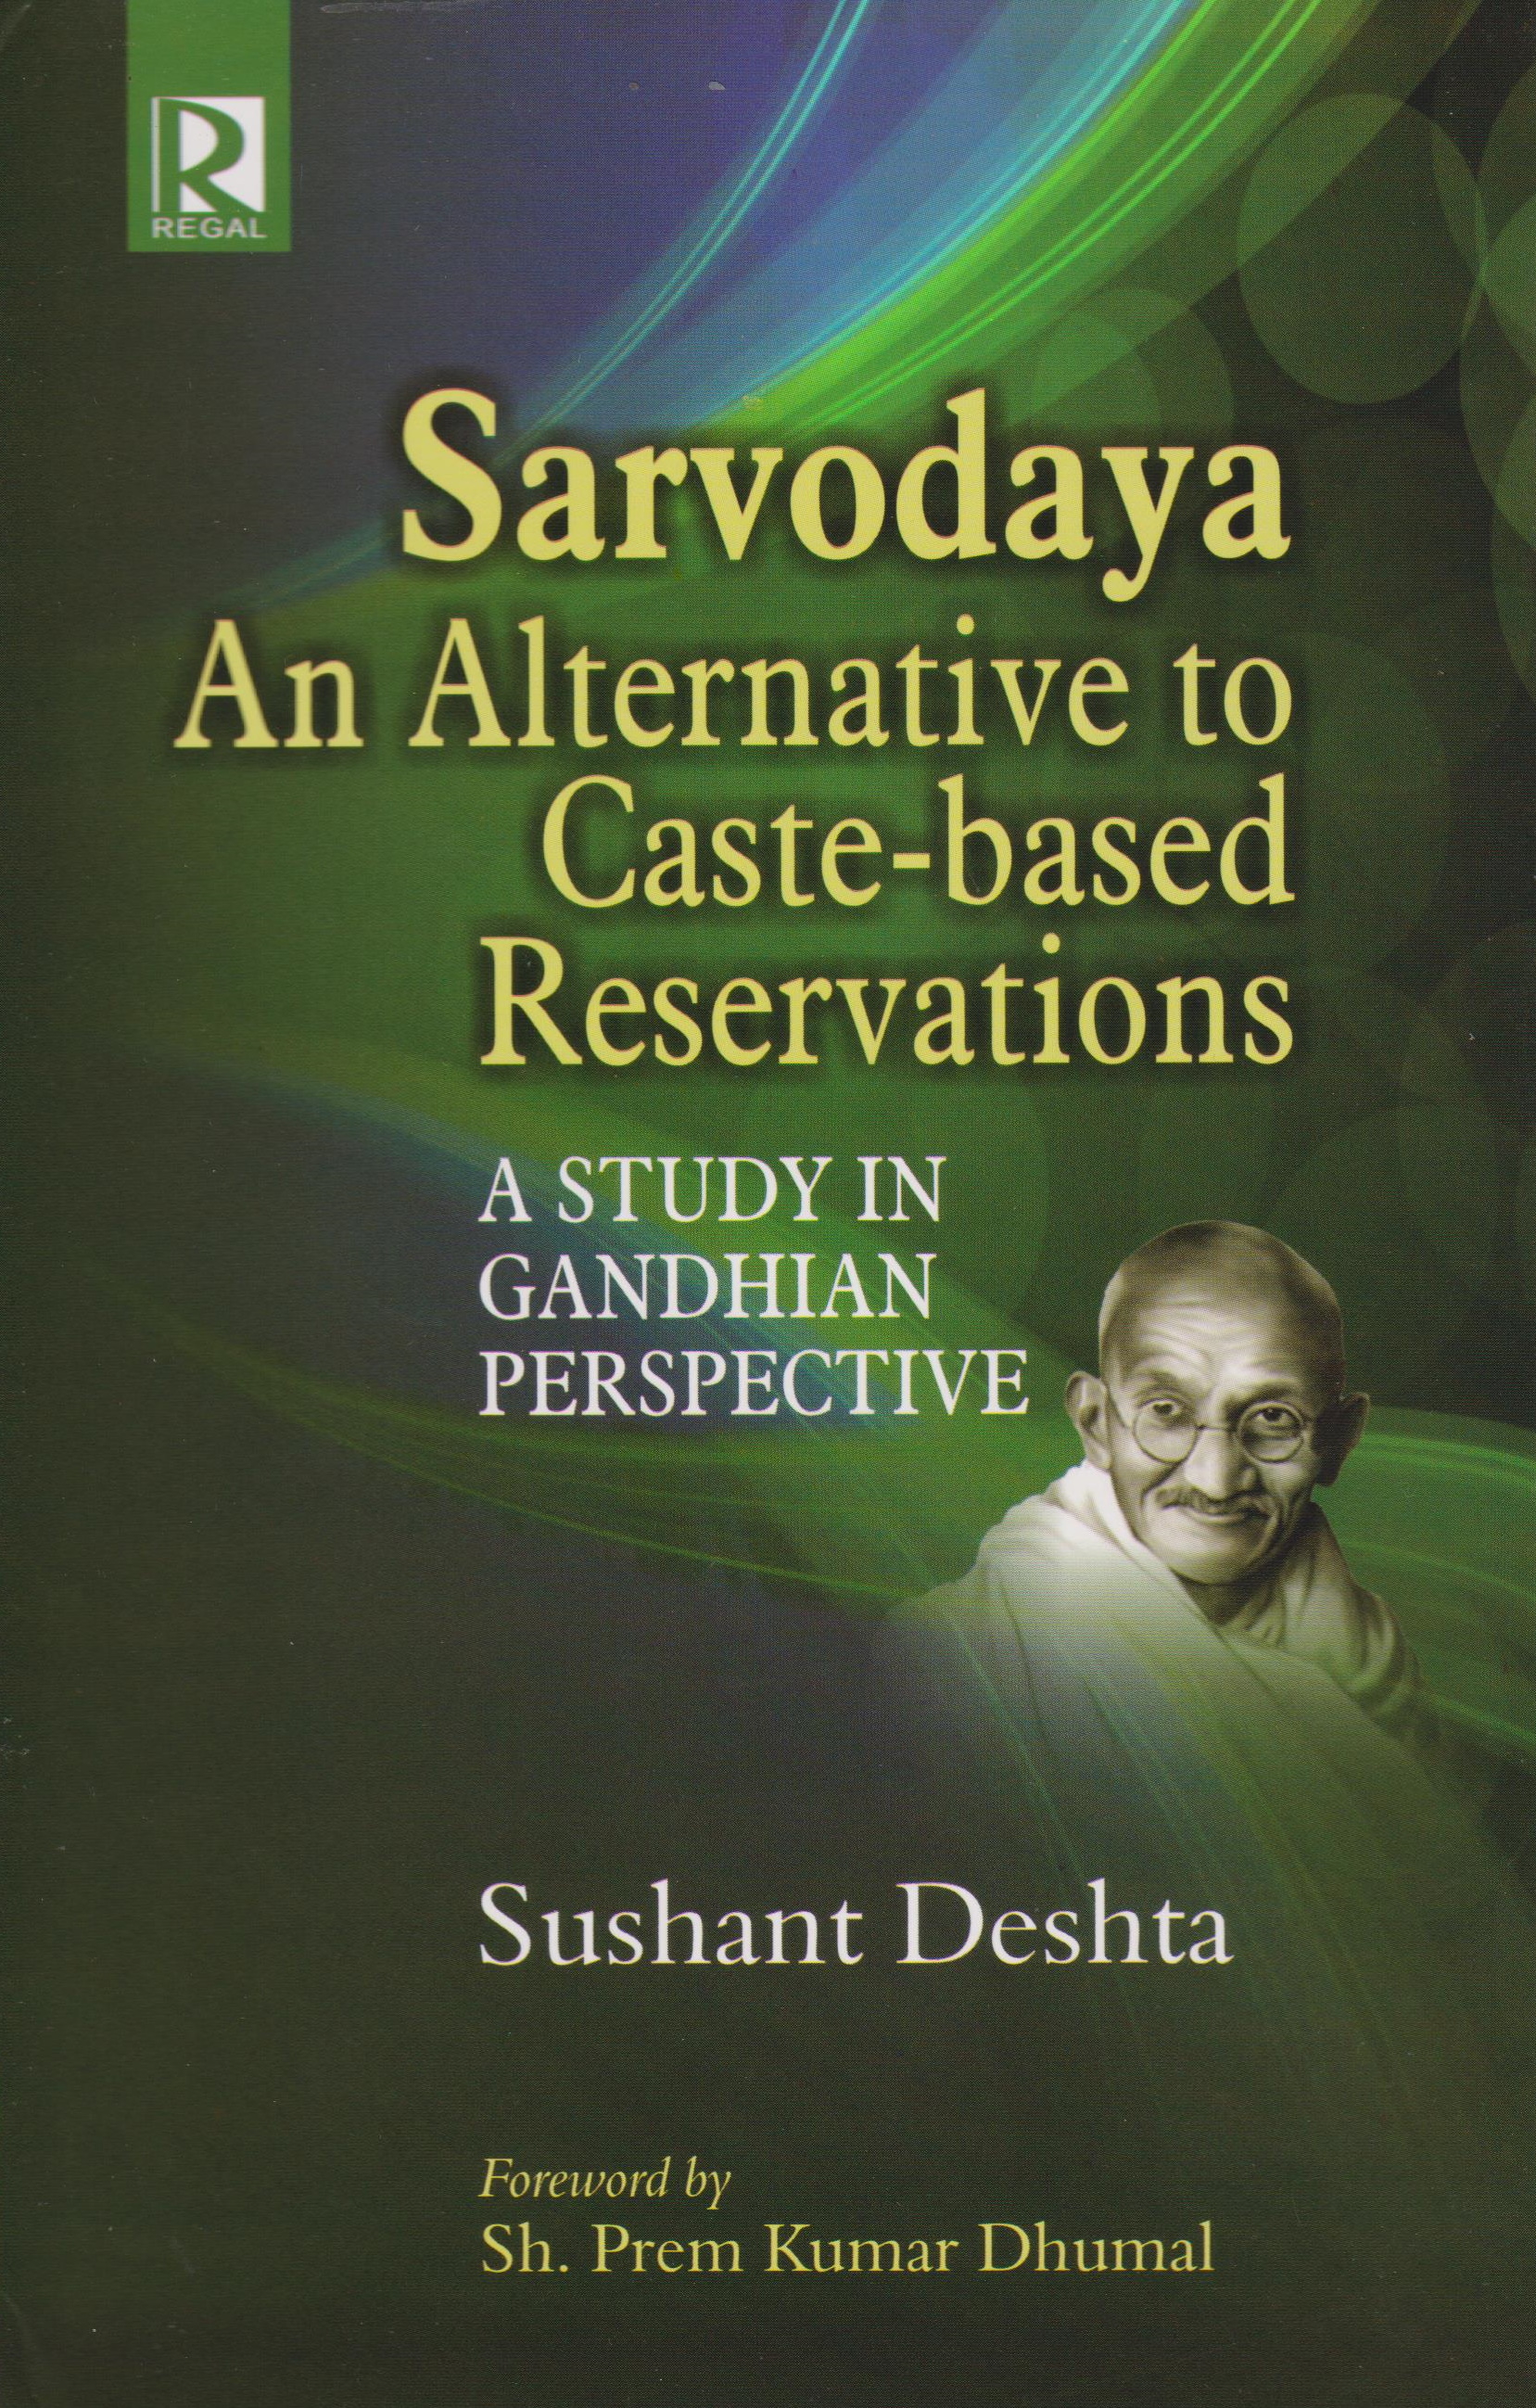 Sarvodaya an Alternative to Caste-based Reservations: A Study in Gandhian Perspective